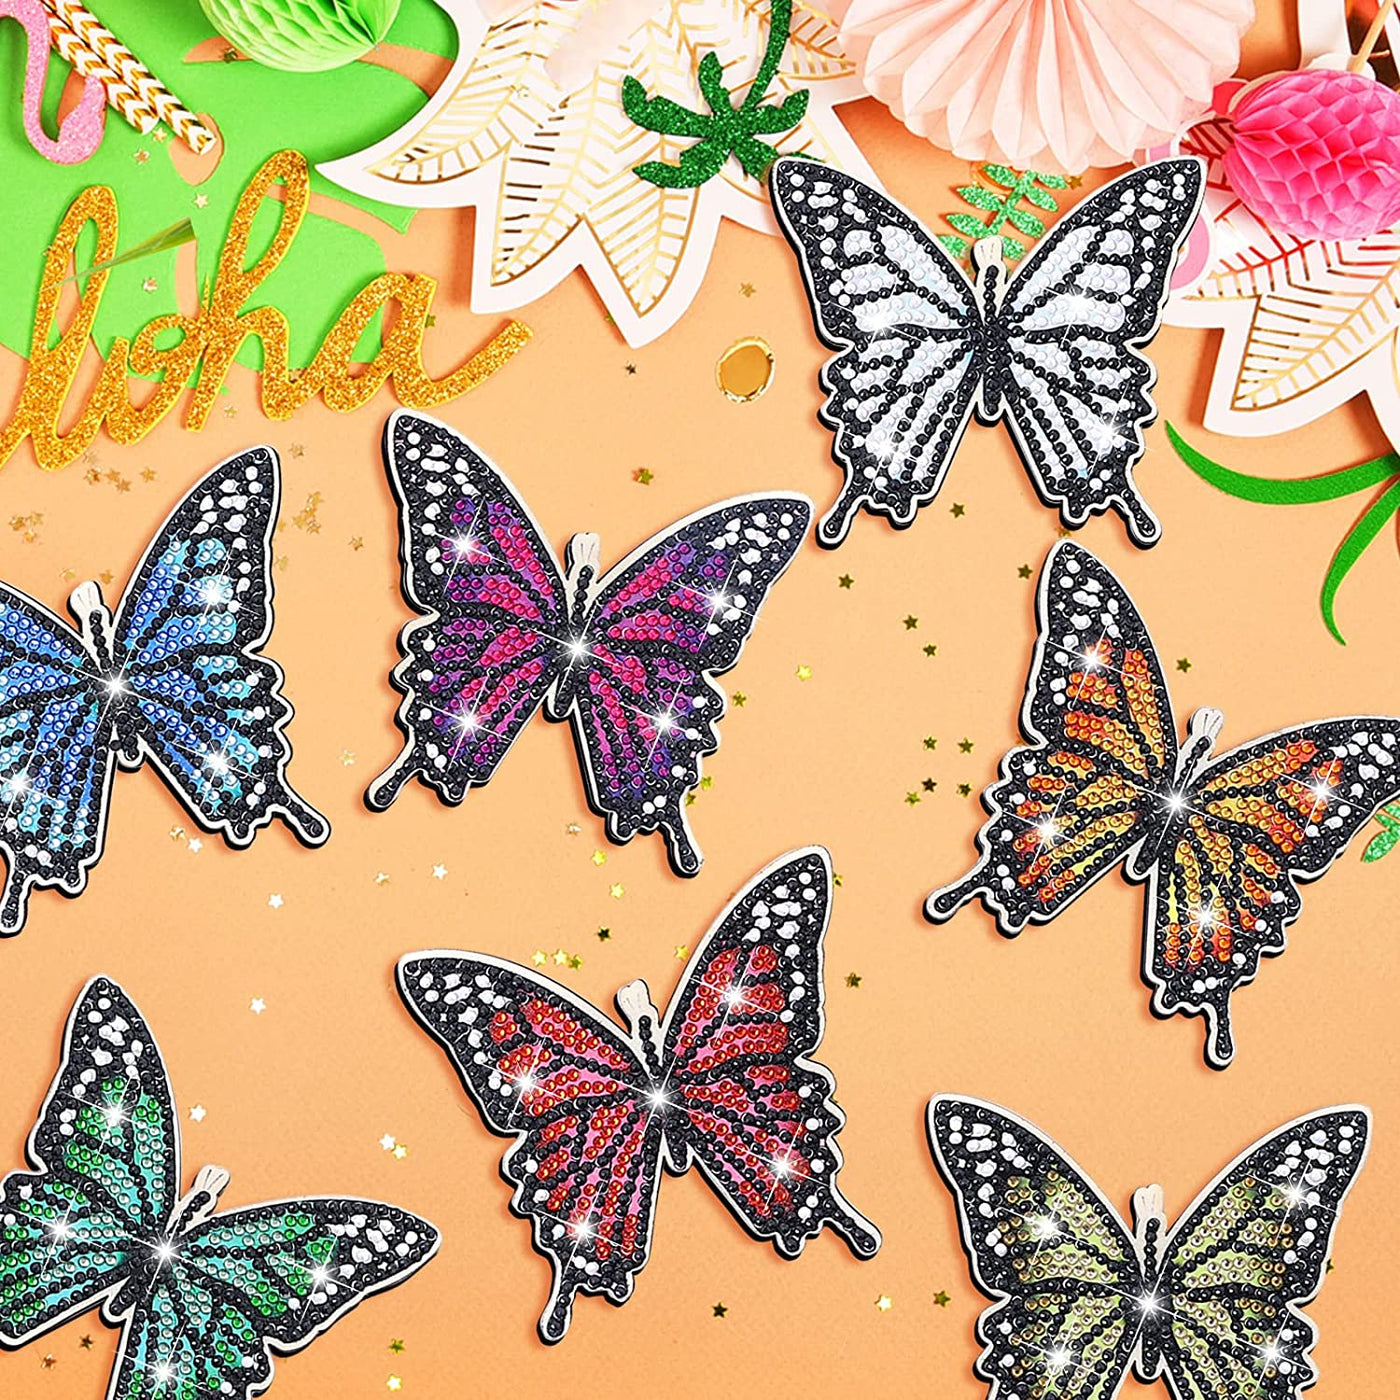 10 Pcs Butterfly Diamond Painting Coasters Kits DIY Spring